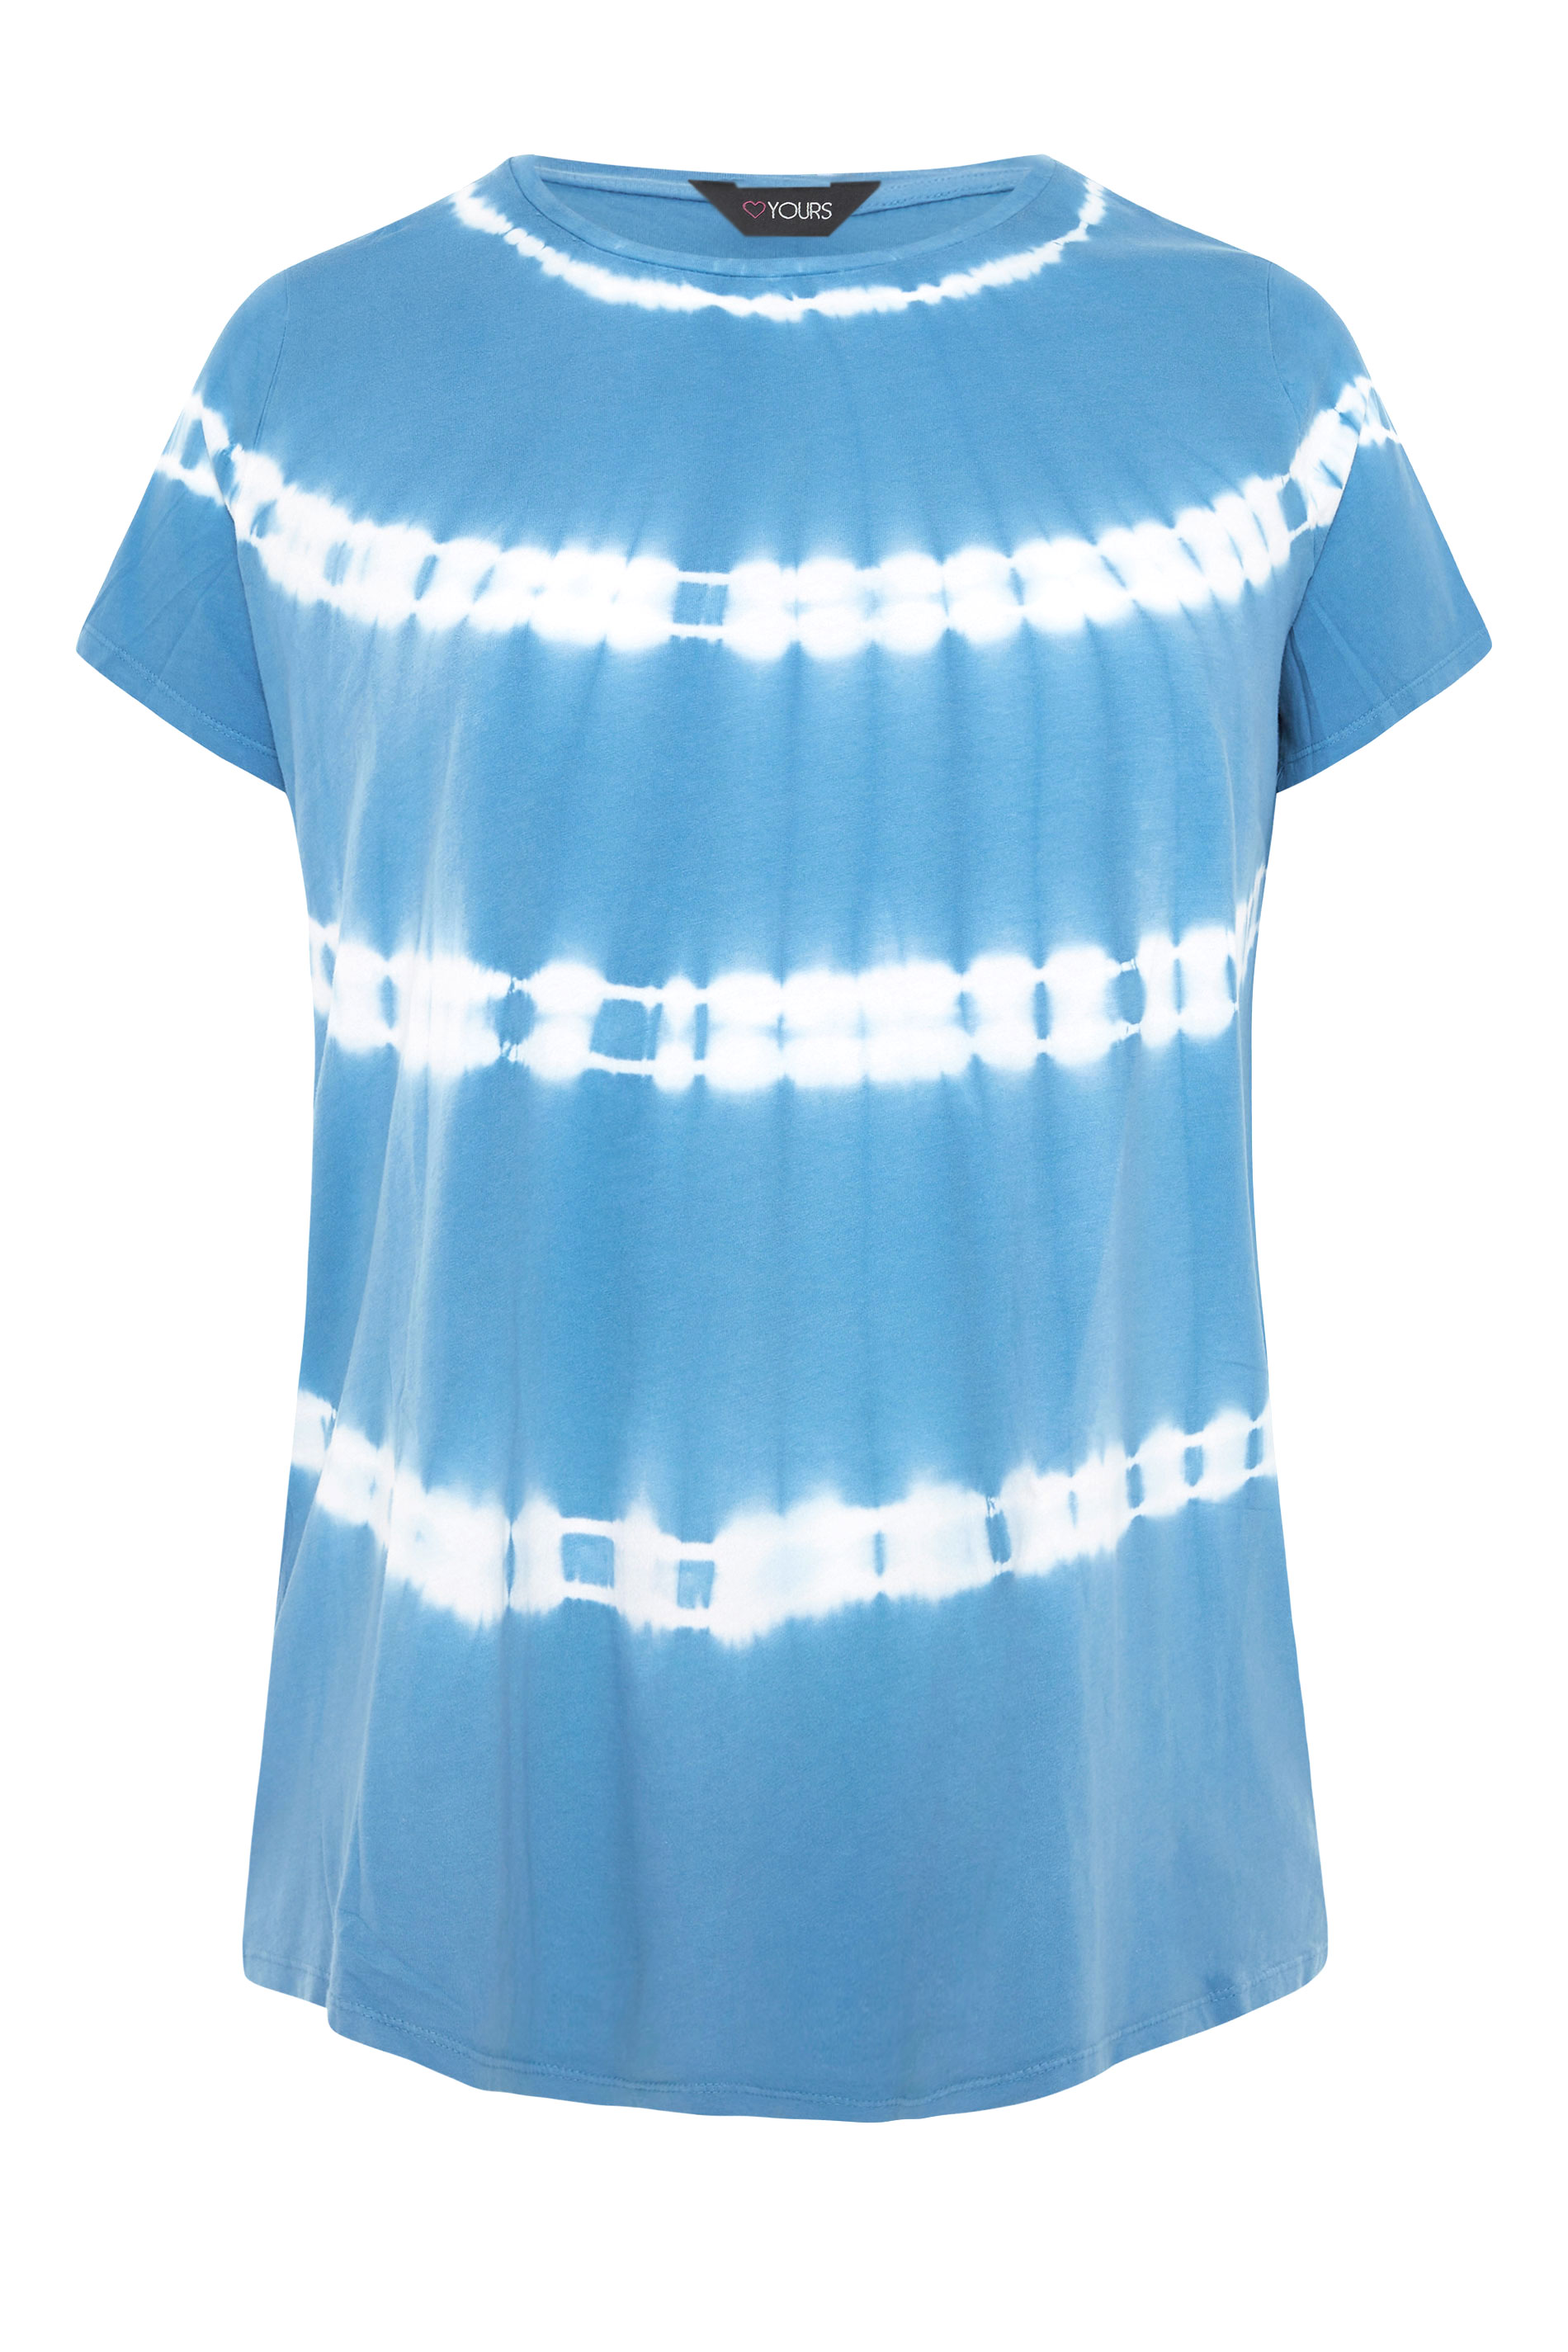 Grande taille  Tops Grande taille  T-Shirts | T-Shirt Bleu Tie & Dye - BU84381